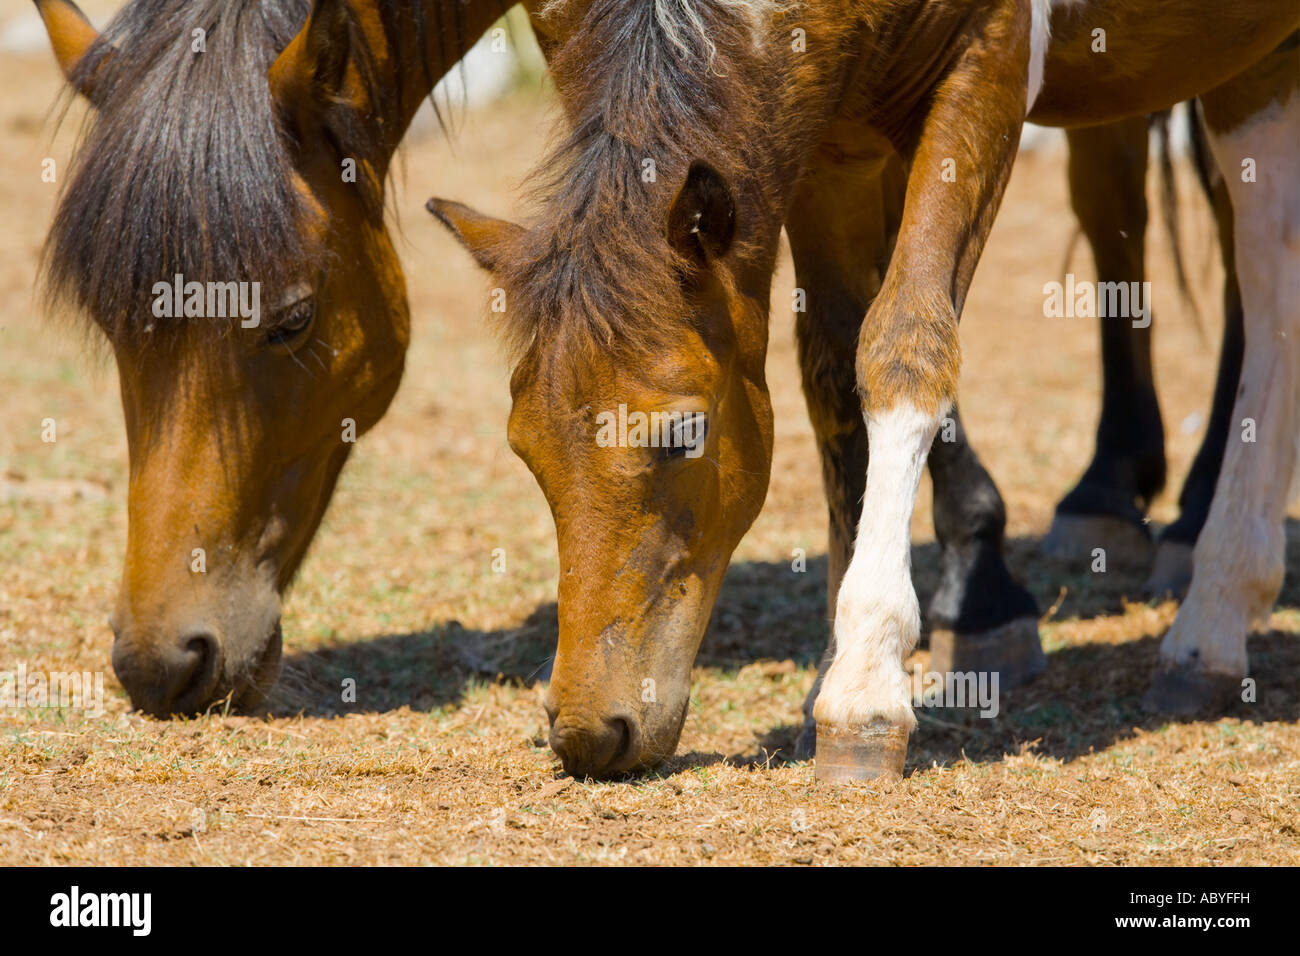 Two horses close up heads, Safari site on Brioni islands, Veliki Brijun, Croatia Stock Photo